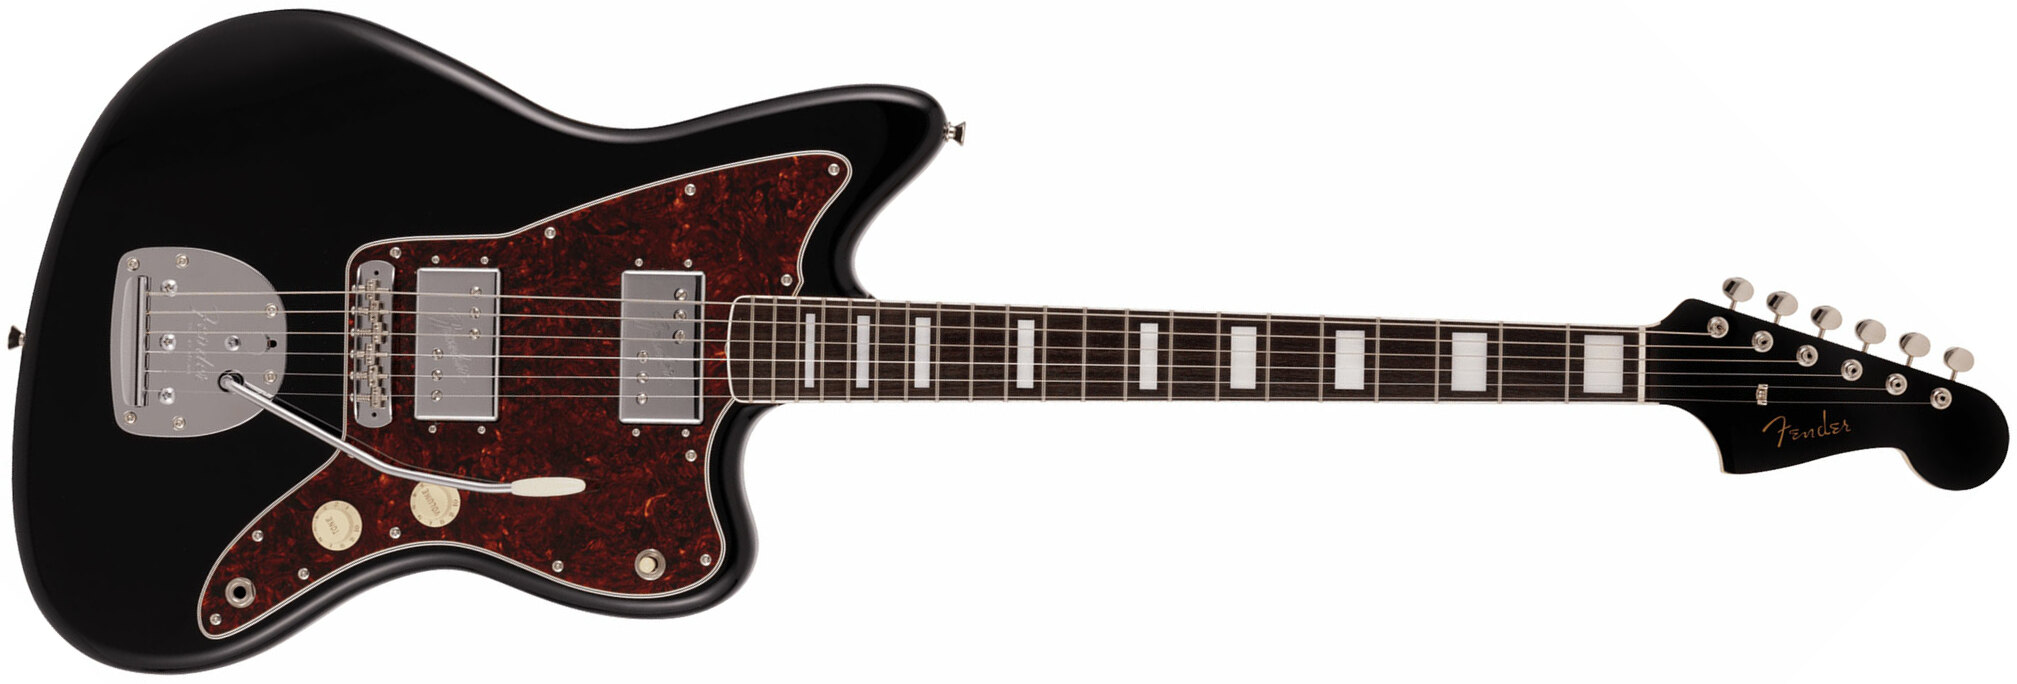 Fender Jazzmaster 60s Hh Wide Range Cunife Mij Traditional Jap 2h Trem Rw - Black - Guitarra eléctrica de doble corte. - Main picture